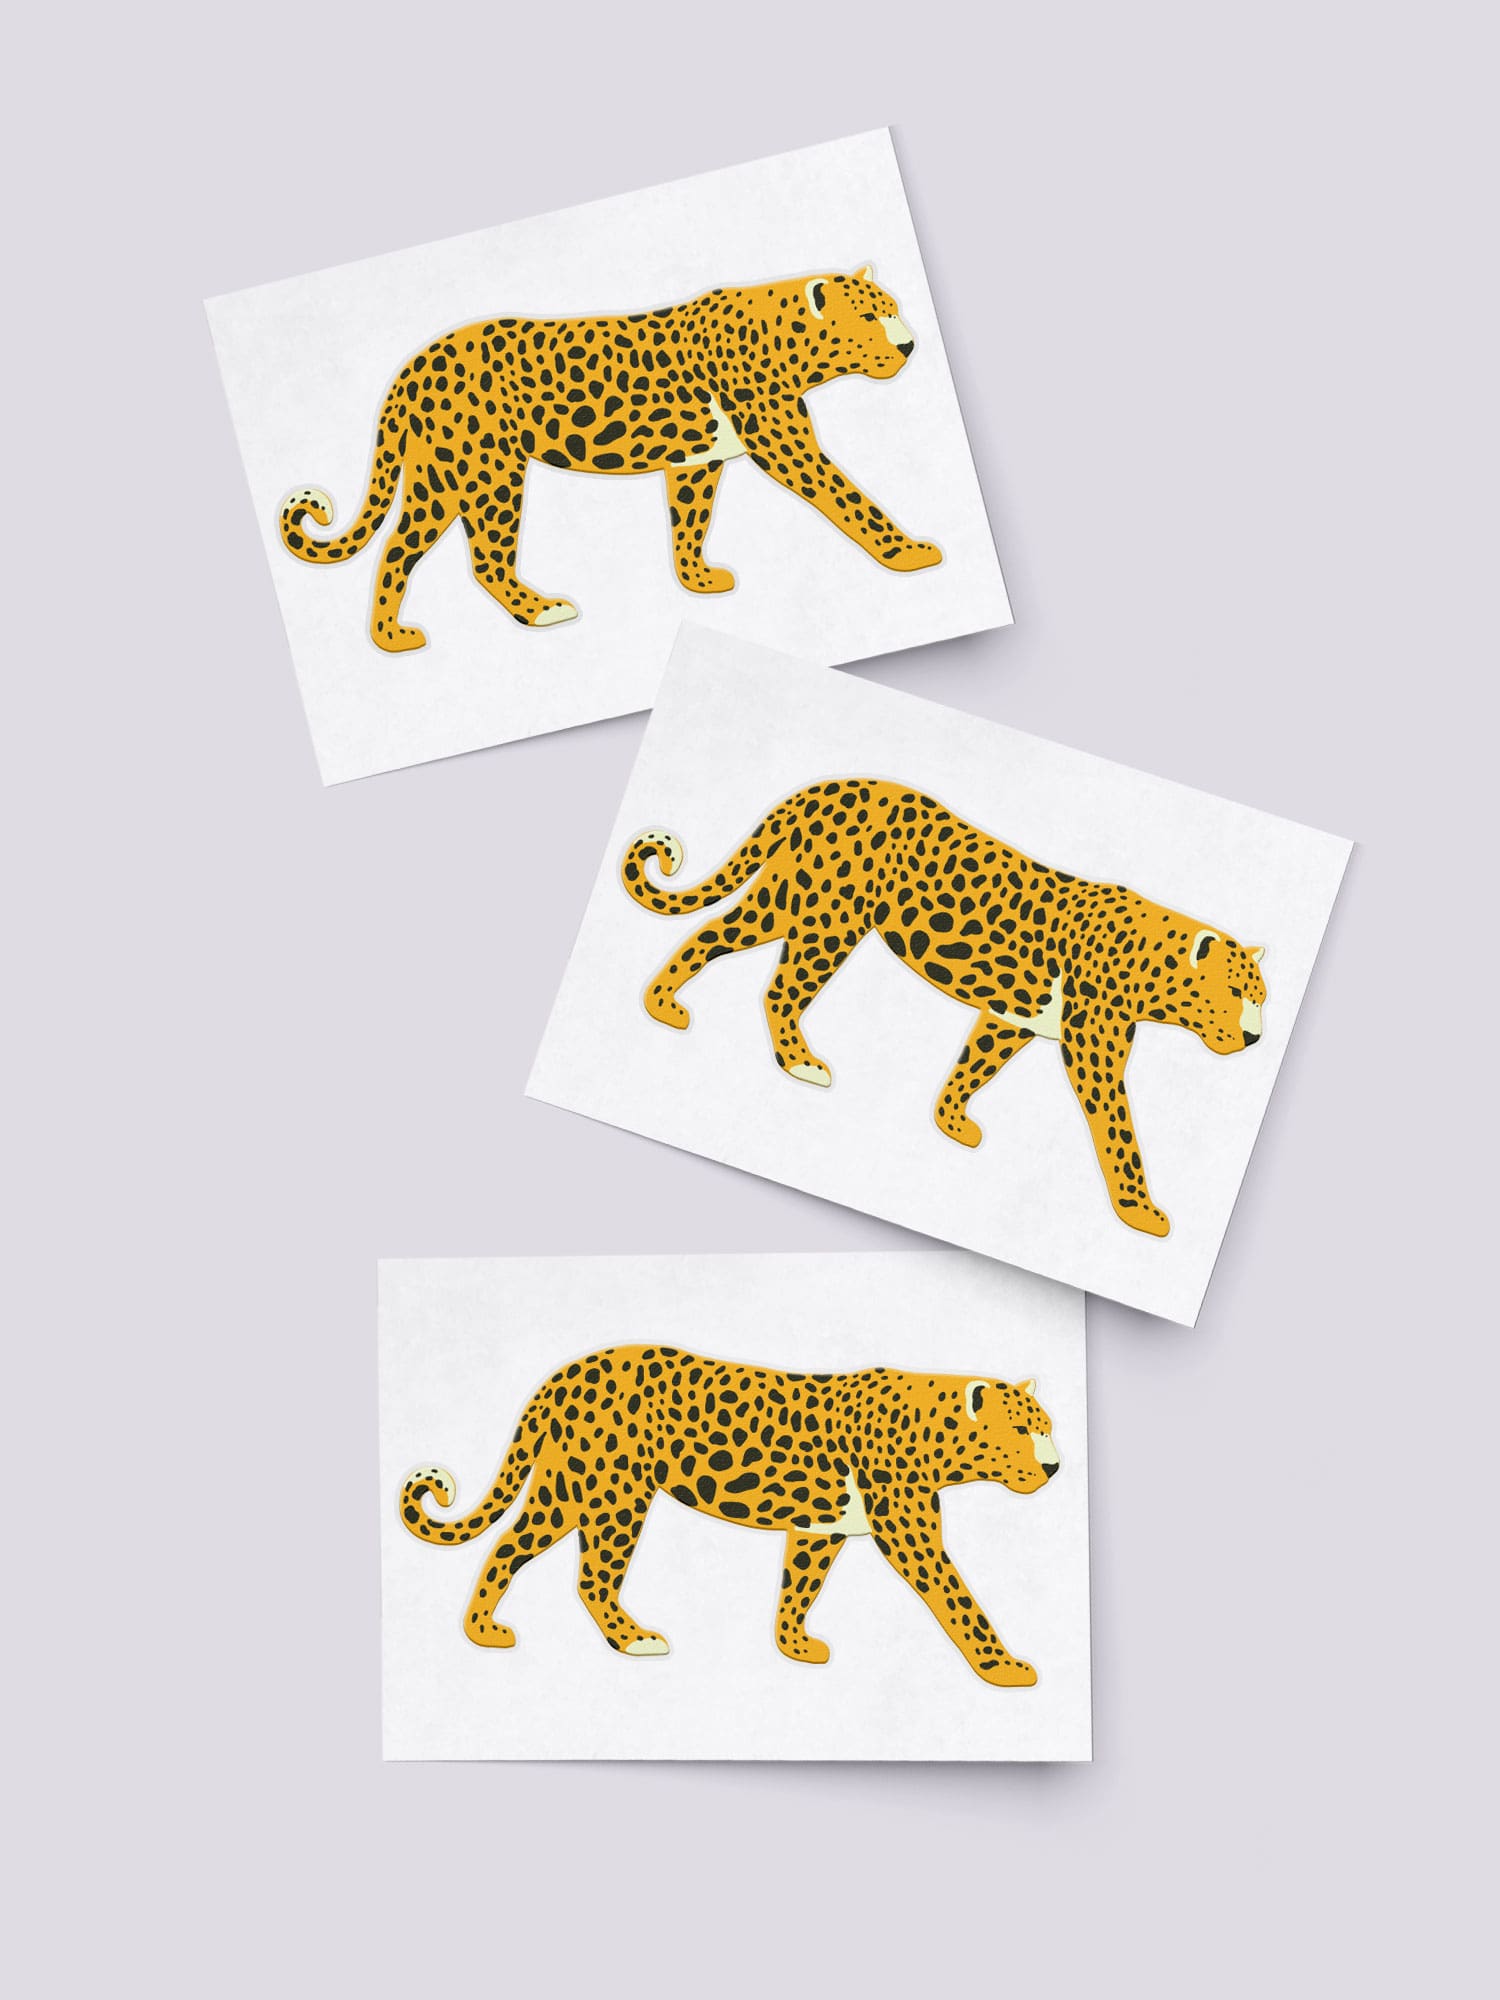 Leopard in the jungle wild animal sticker